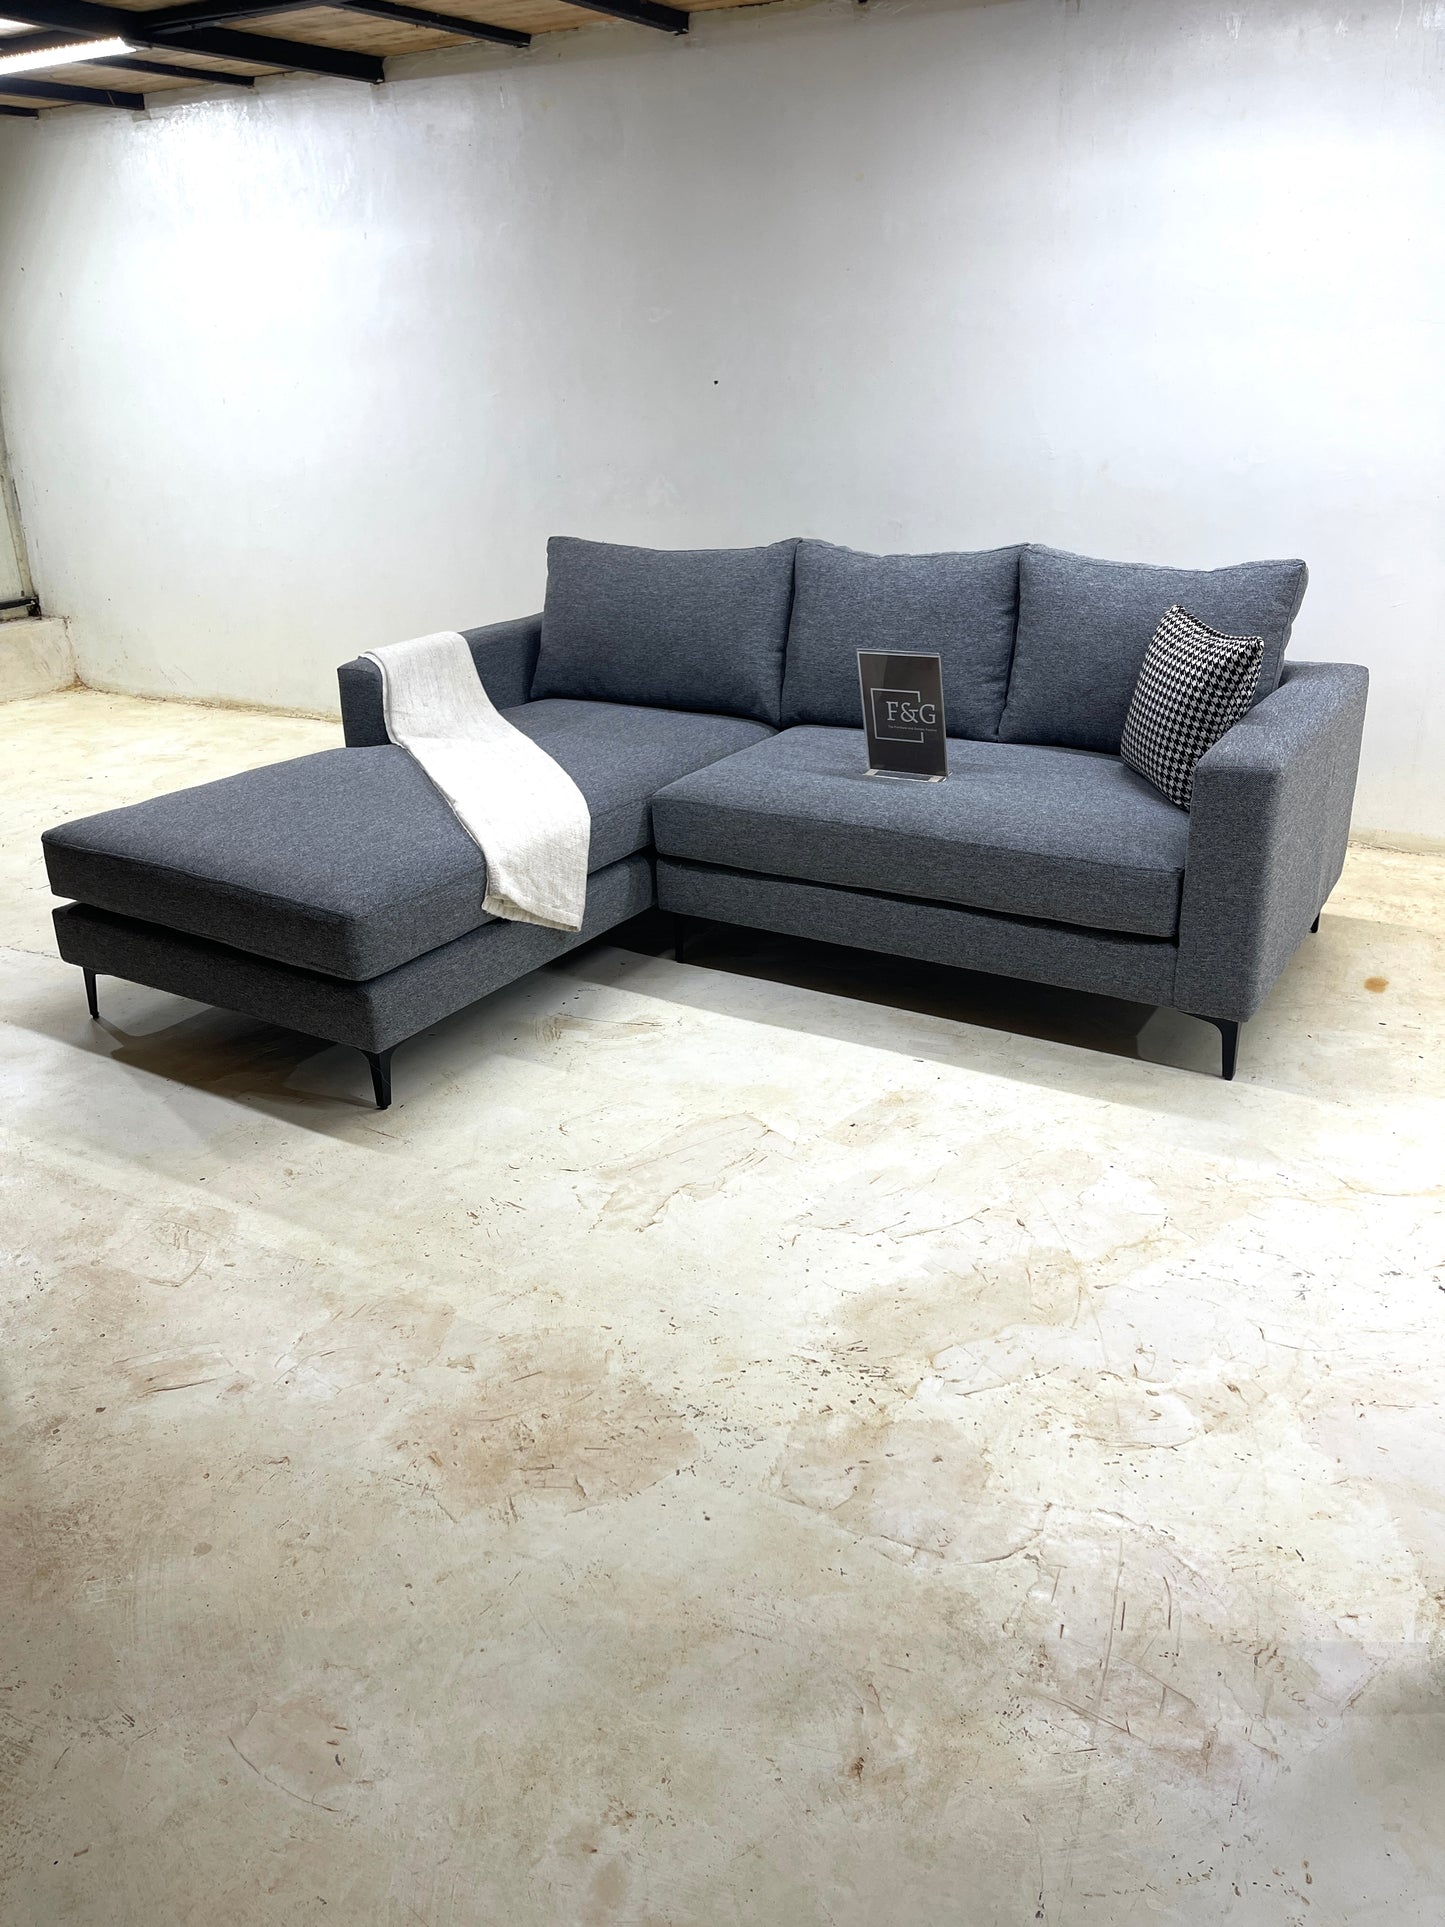 The Urban Sectional Sofa